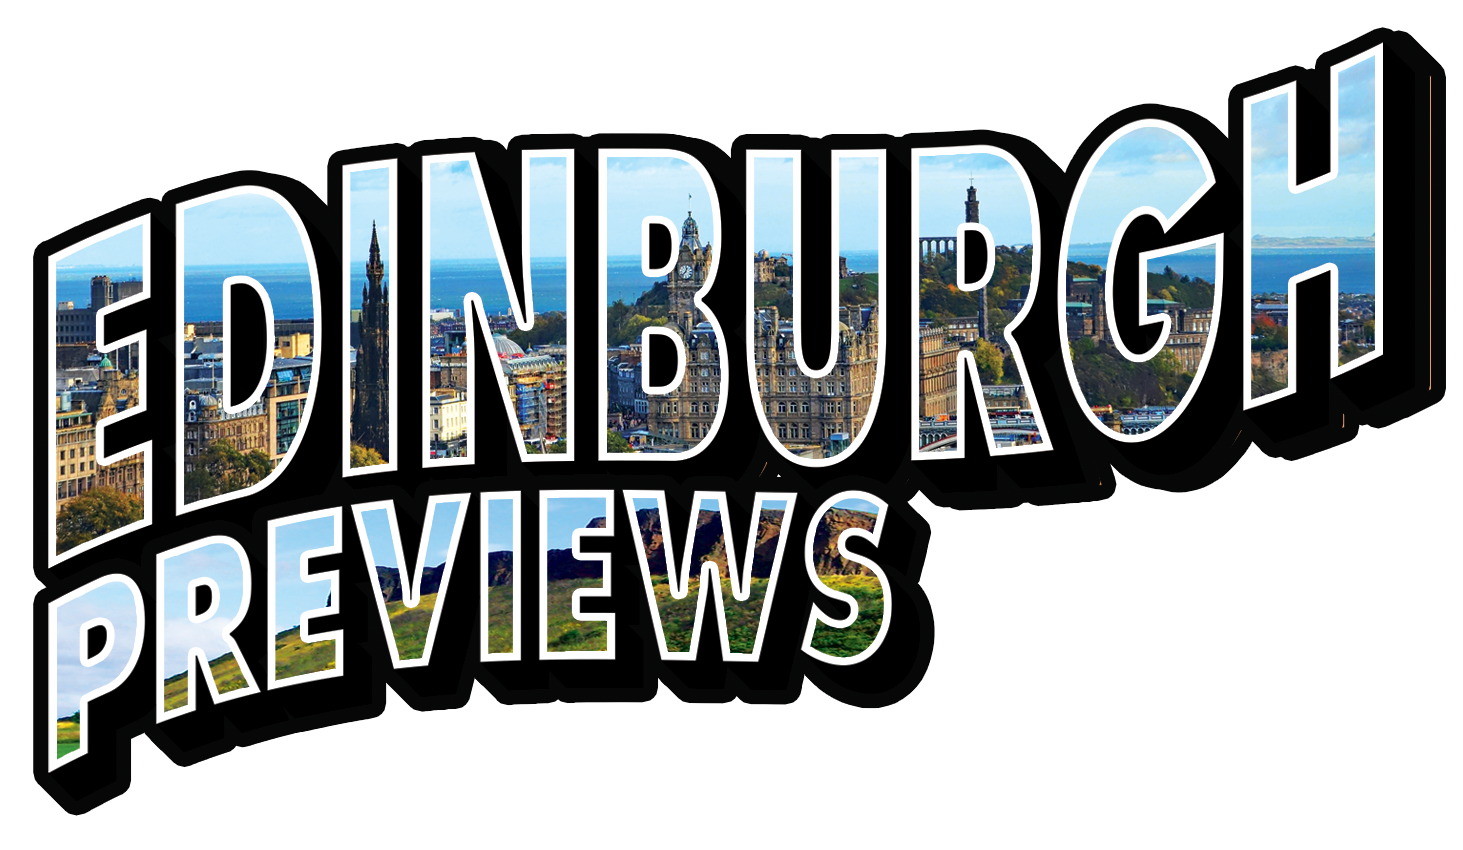 Edinburgh Previews logo with the city of Edinburgh inside the text